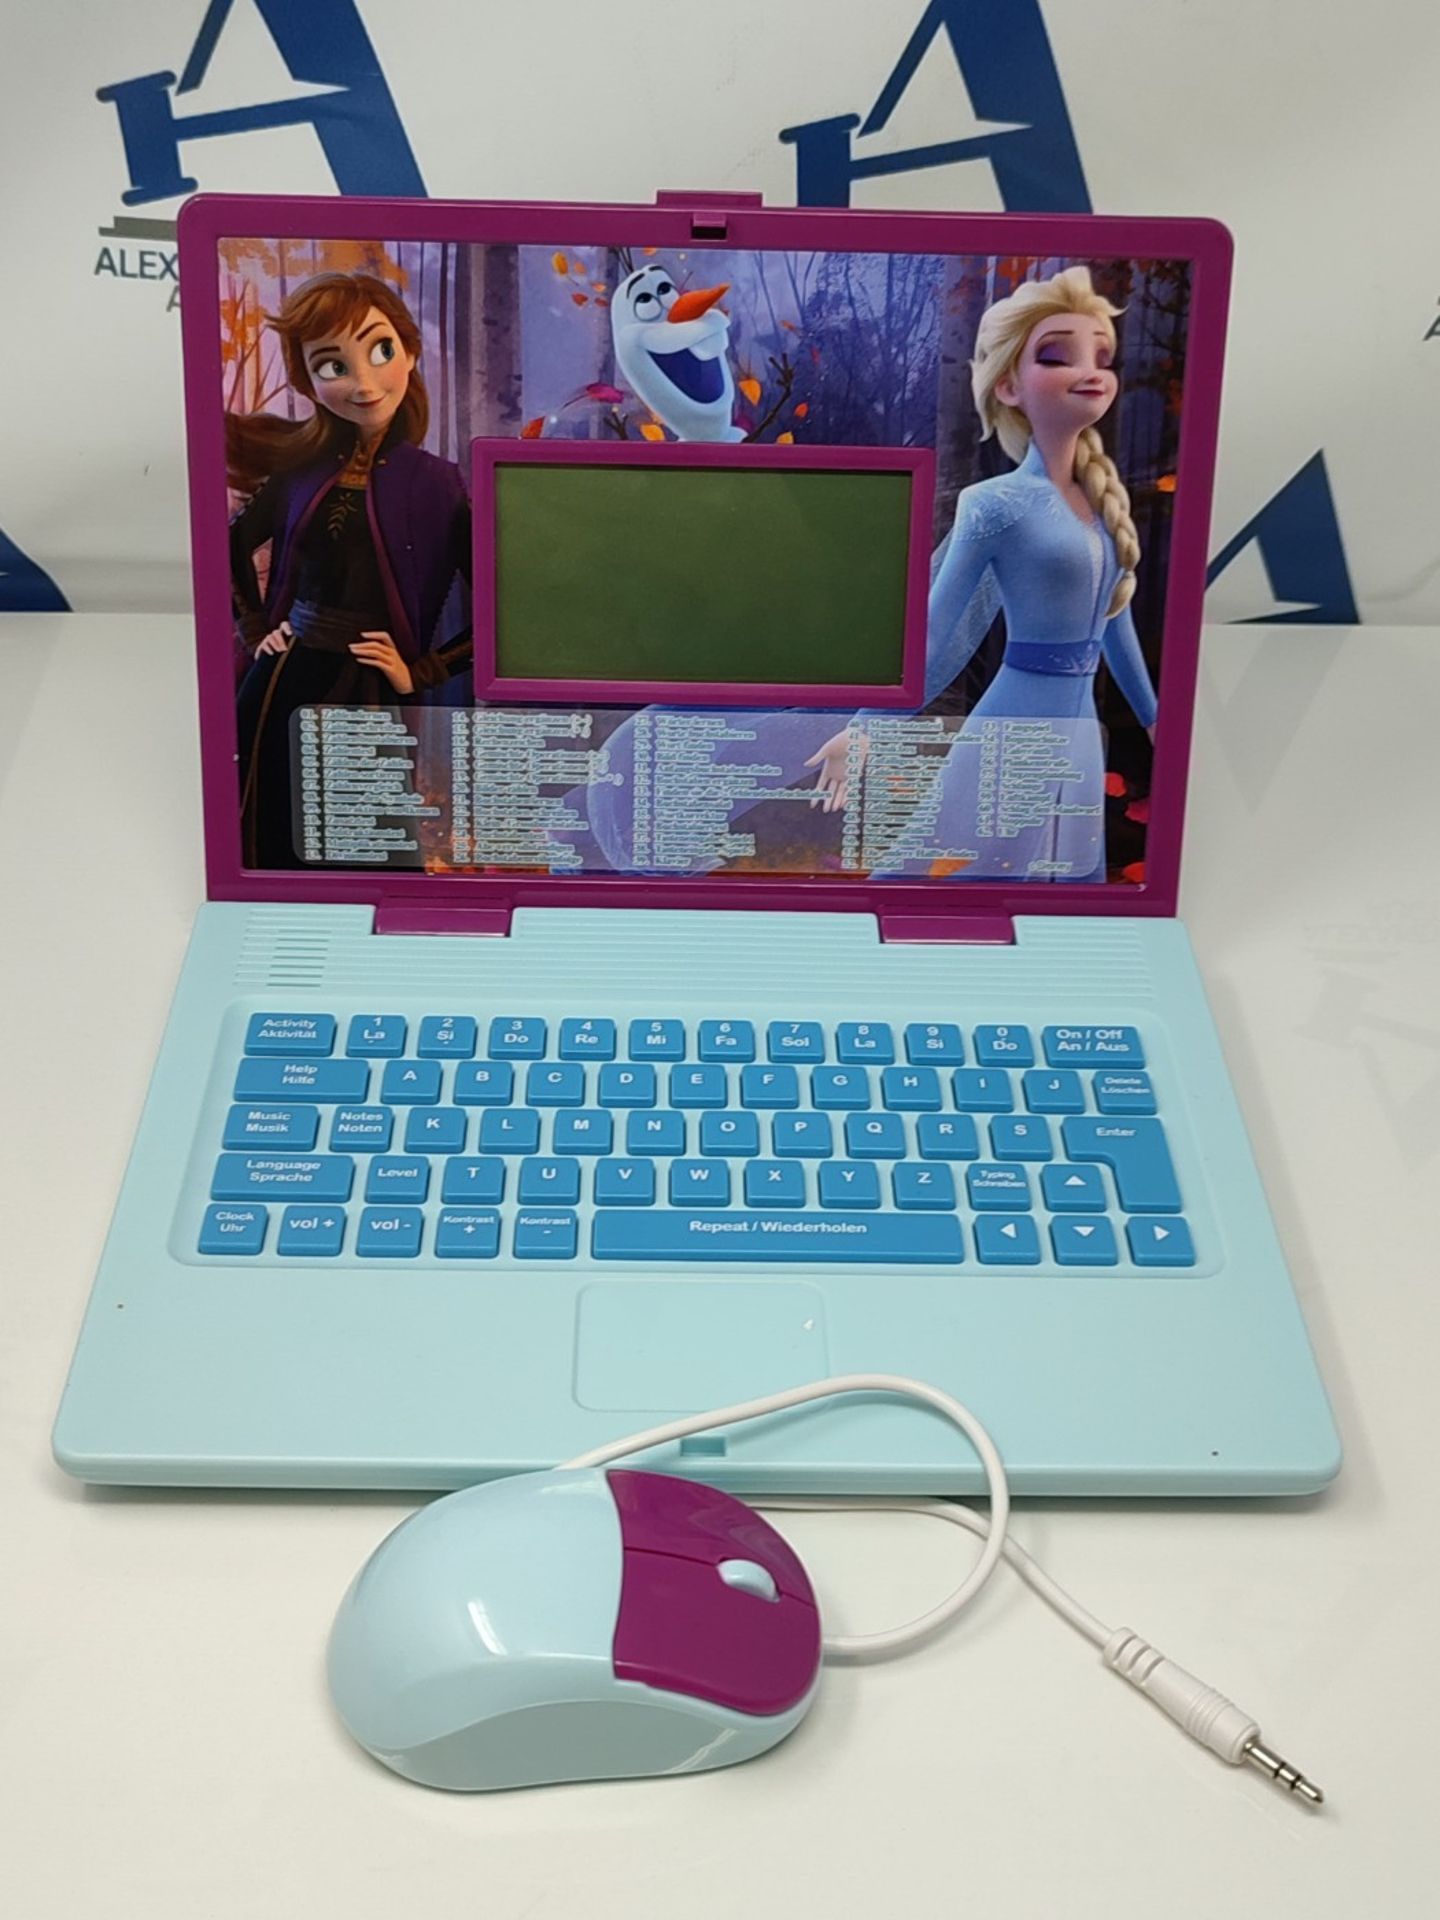 Lexibook Disney Frozen 2 - Educational and Bilingual Laptop German/English - Girls Toy - Image 2 of 3